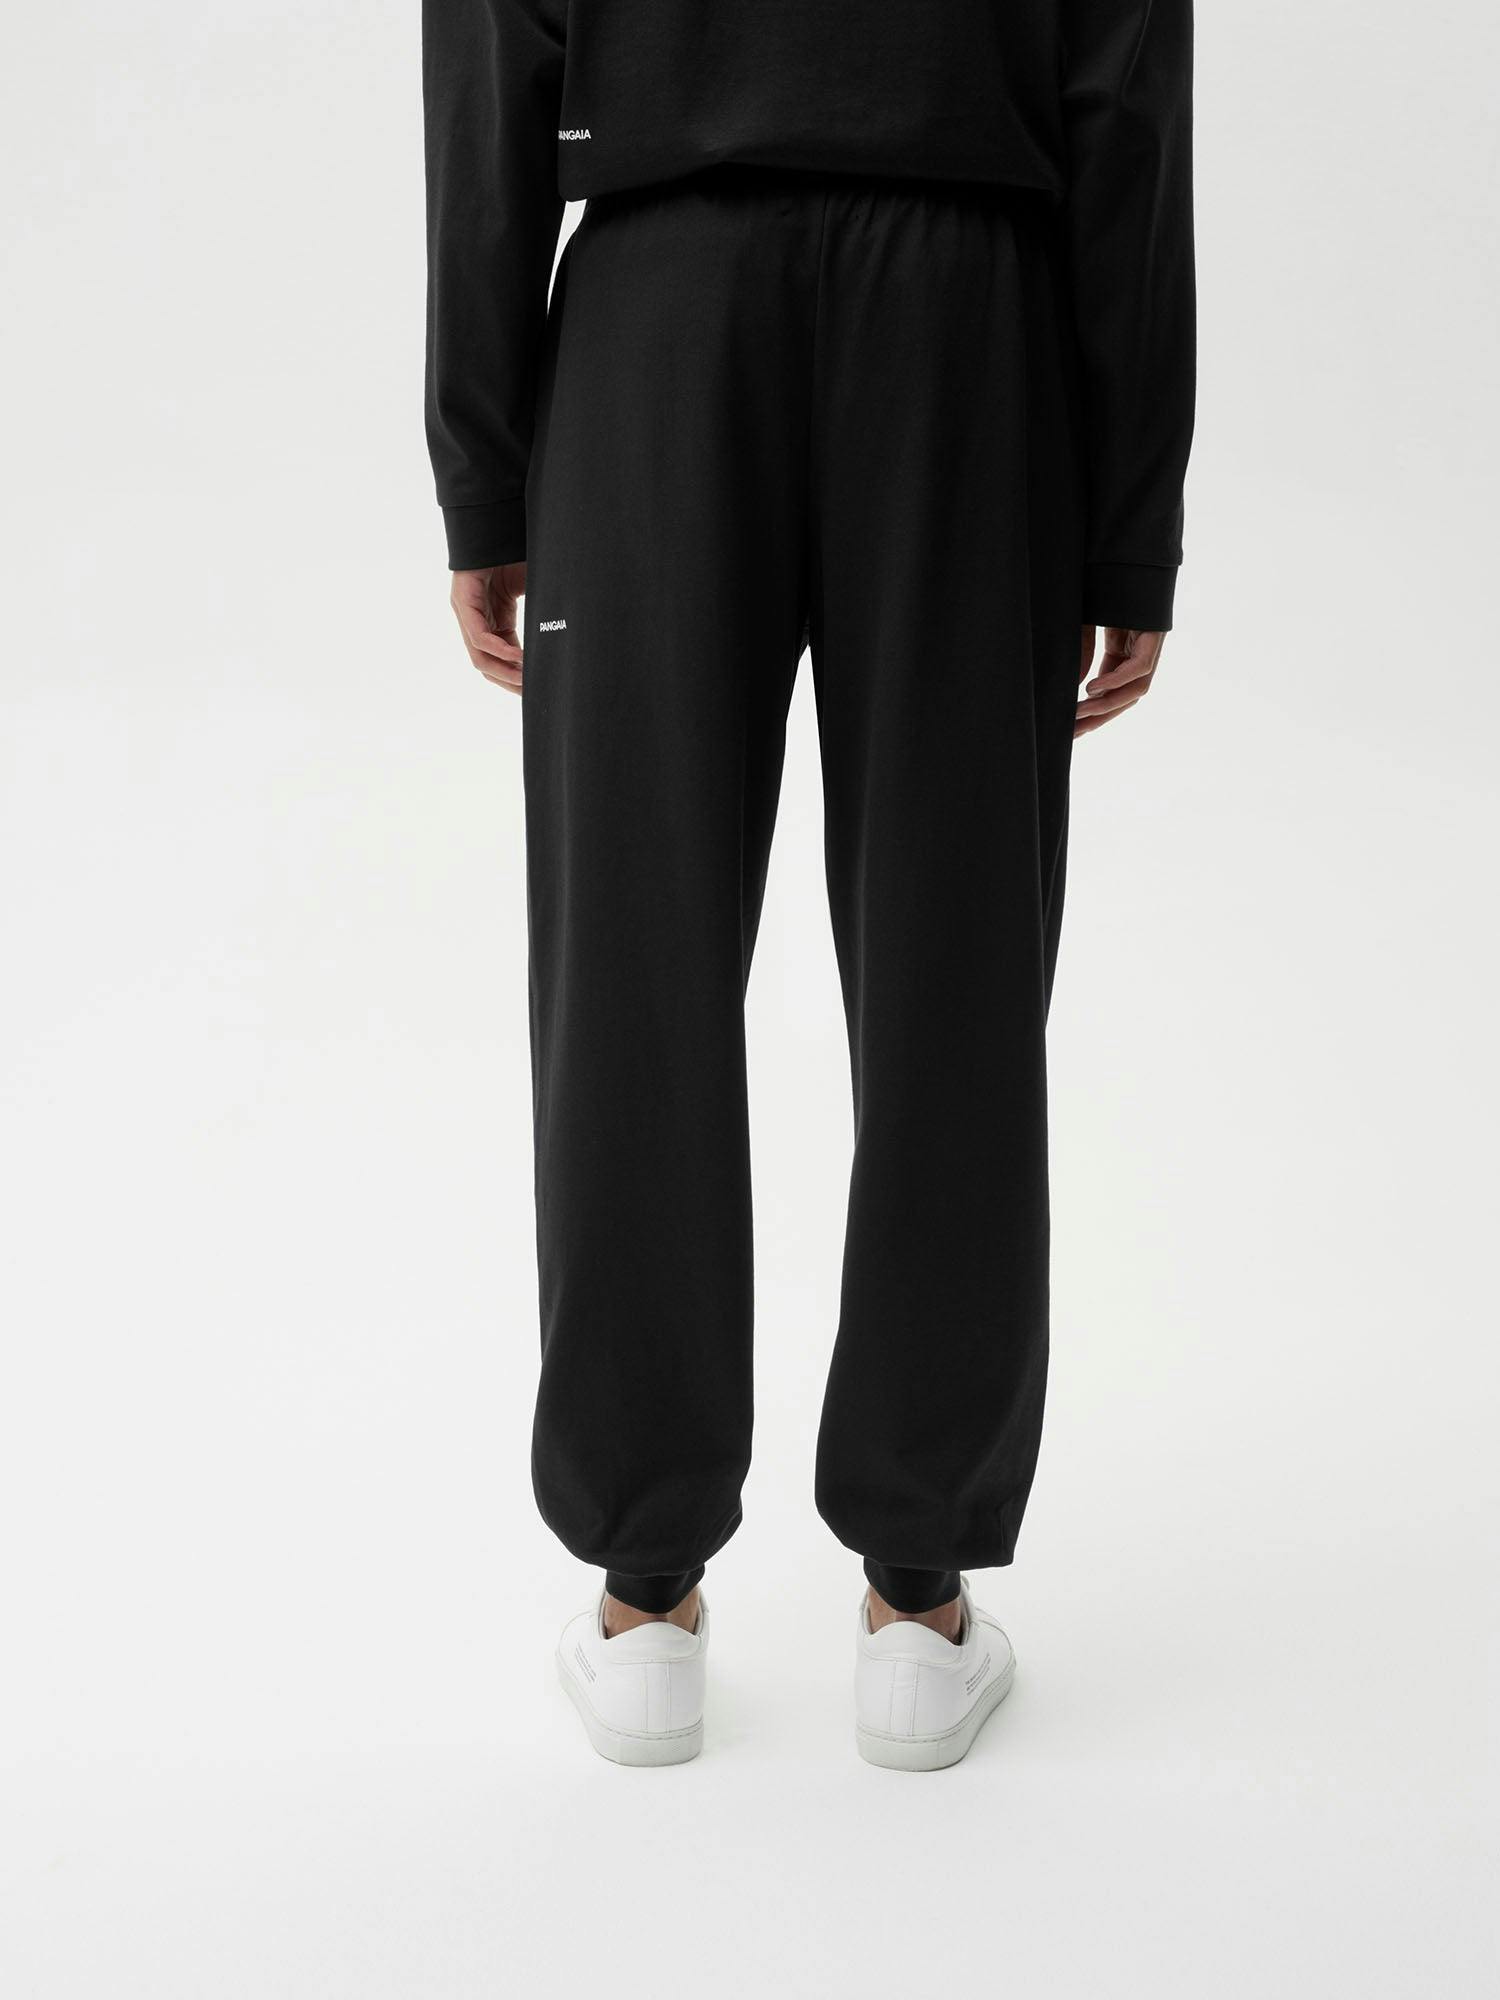 https://cdn.shopify.com/s/files/1/0035/1309/0115/products/Seaweed-Fiber-Loungewear-Track-Pants-Black-Female-Model-2.jpg?v=1662475416